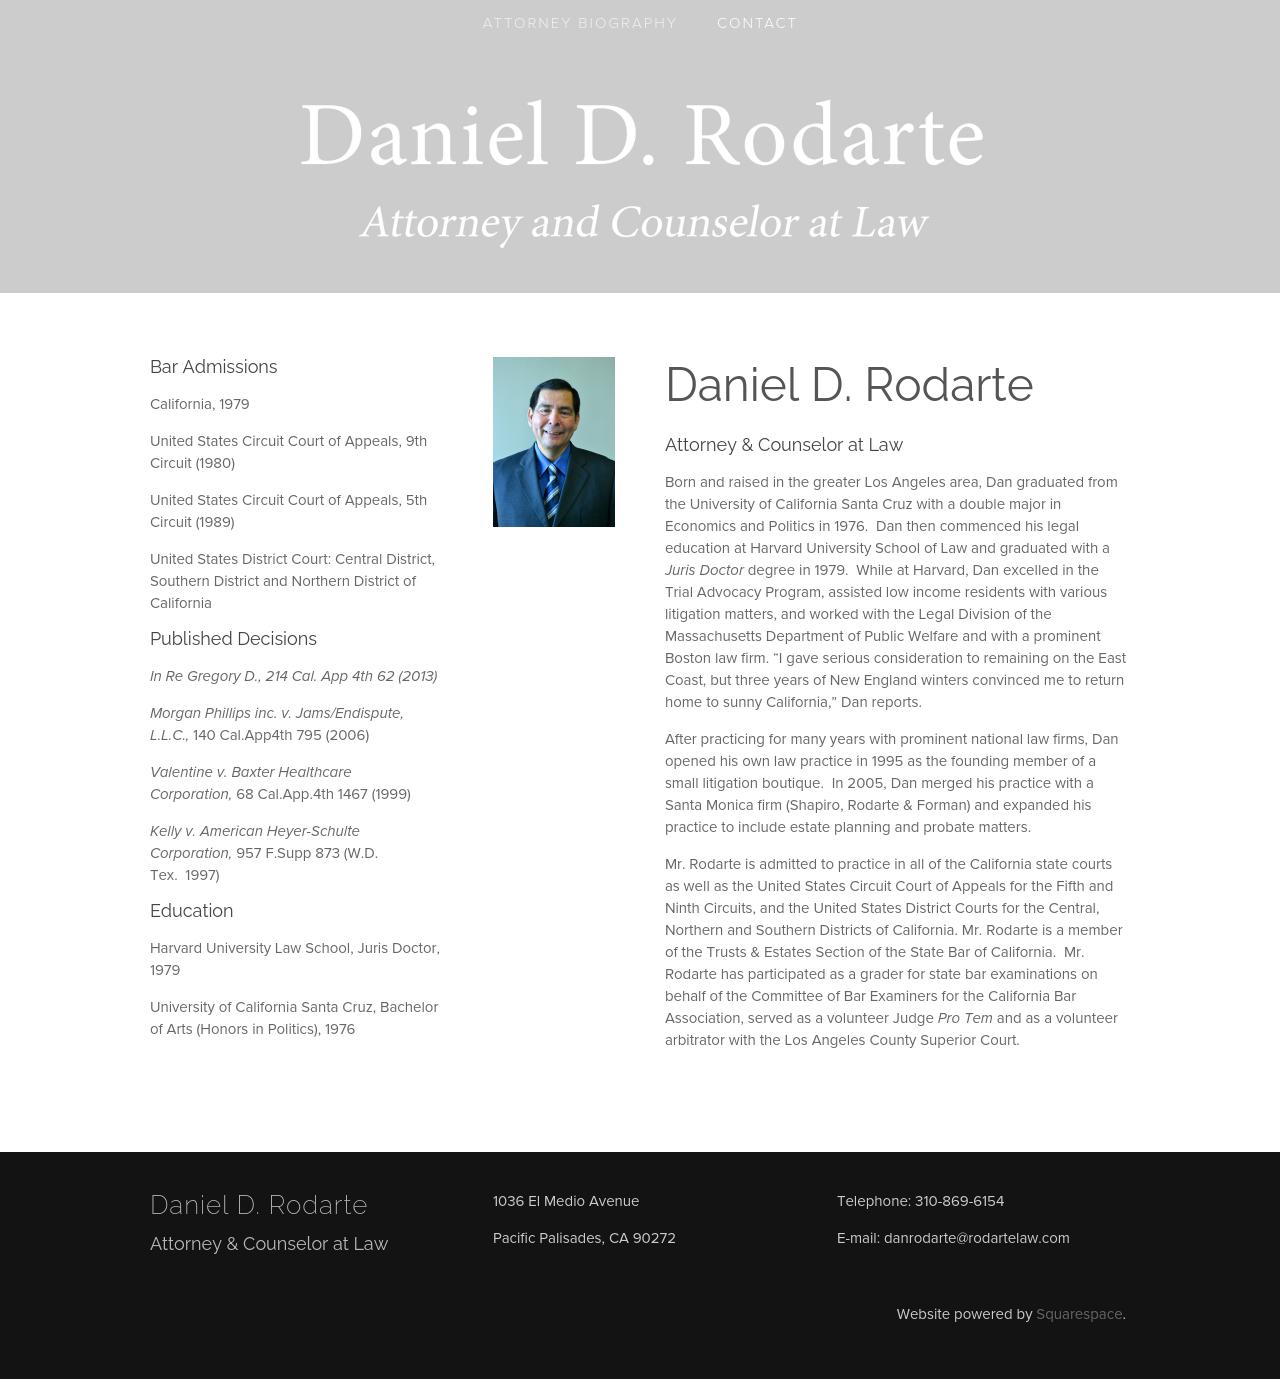 Rodarte Law Offices - Los Angeles CA Lawyers